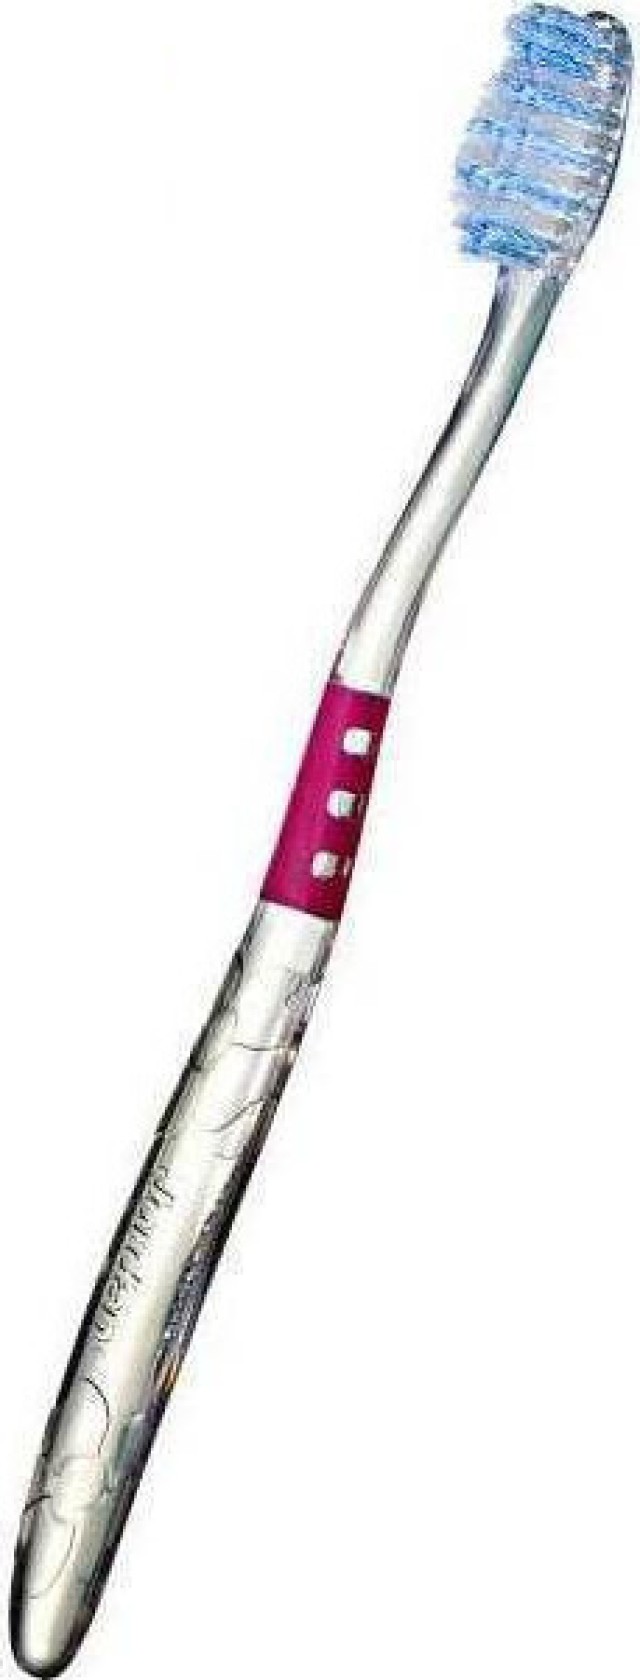 Jordan Target White Soft Οδοντόβουρτσα Μαλακή Διάφανο με Ροζ Λαβή 1 Τεμάχιο